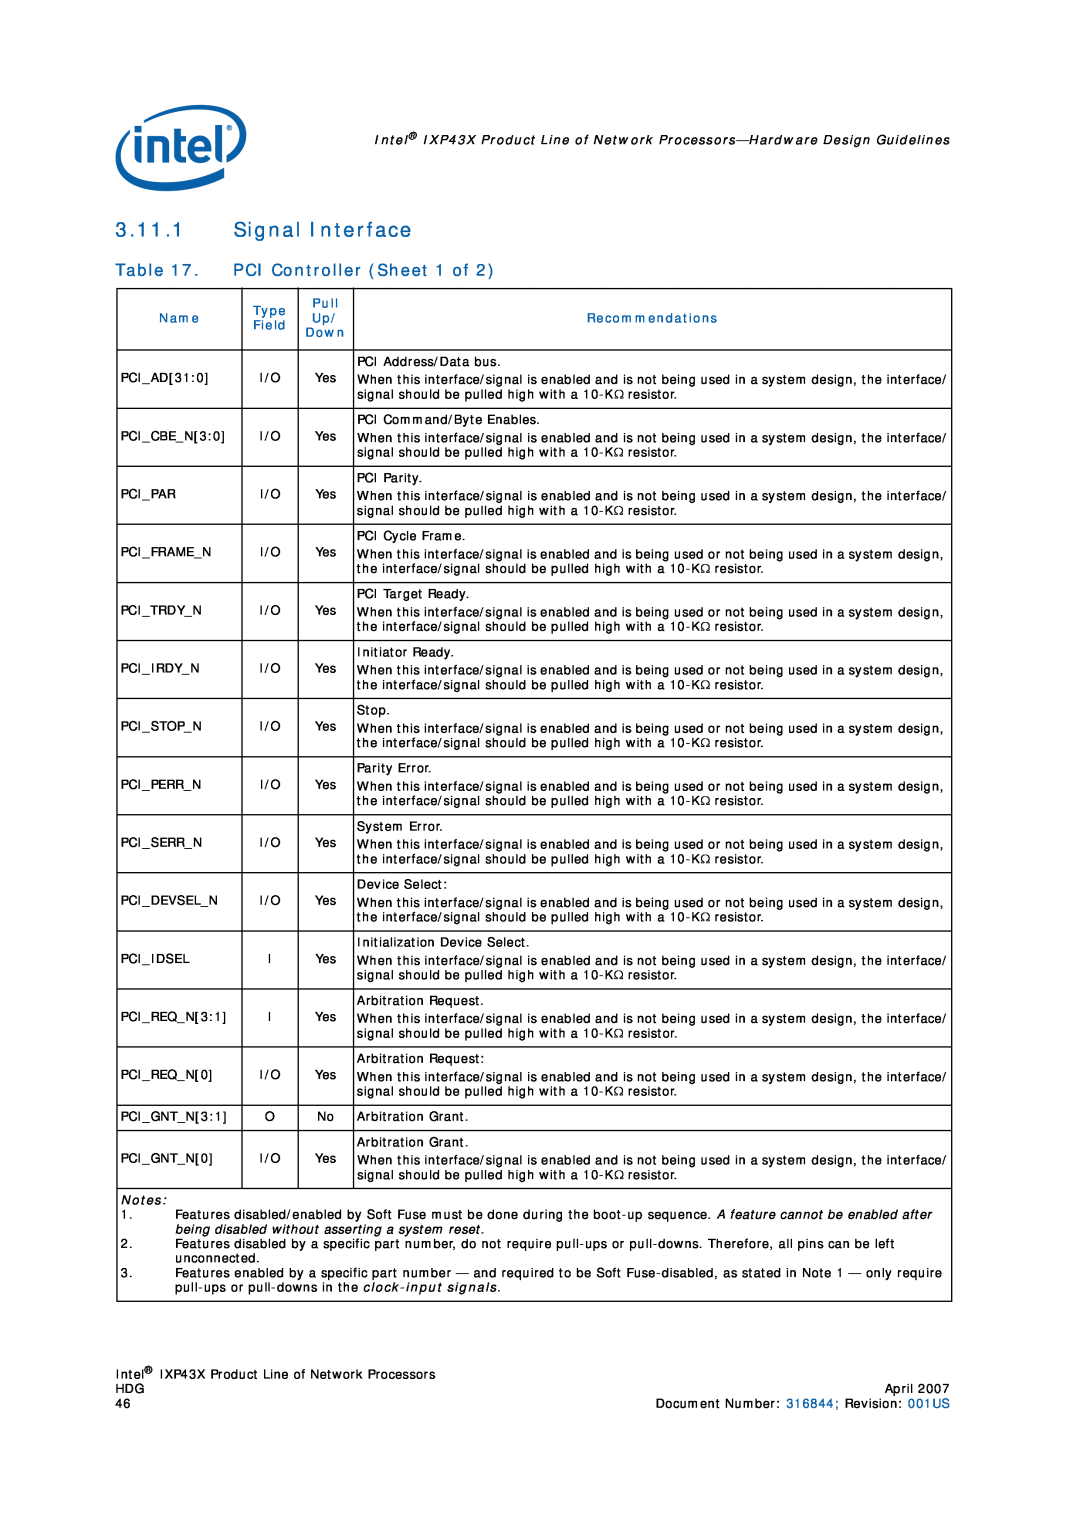 Intel IXP43X manual Signal Interface, PCI Controller Sheet 1 of 